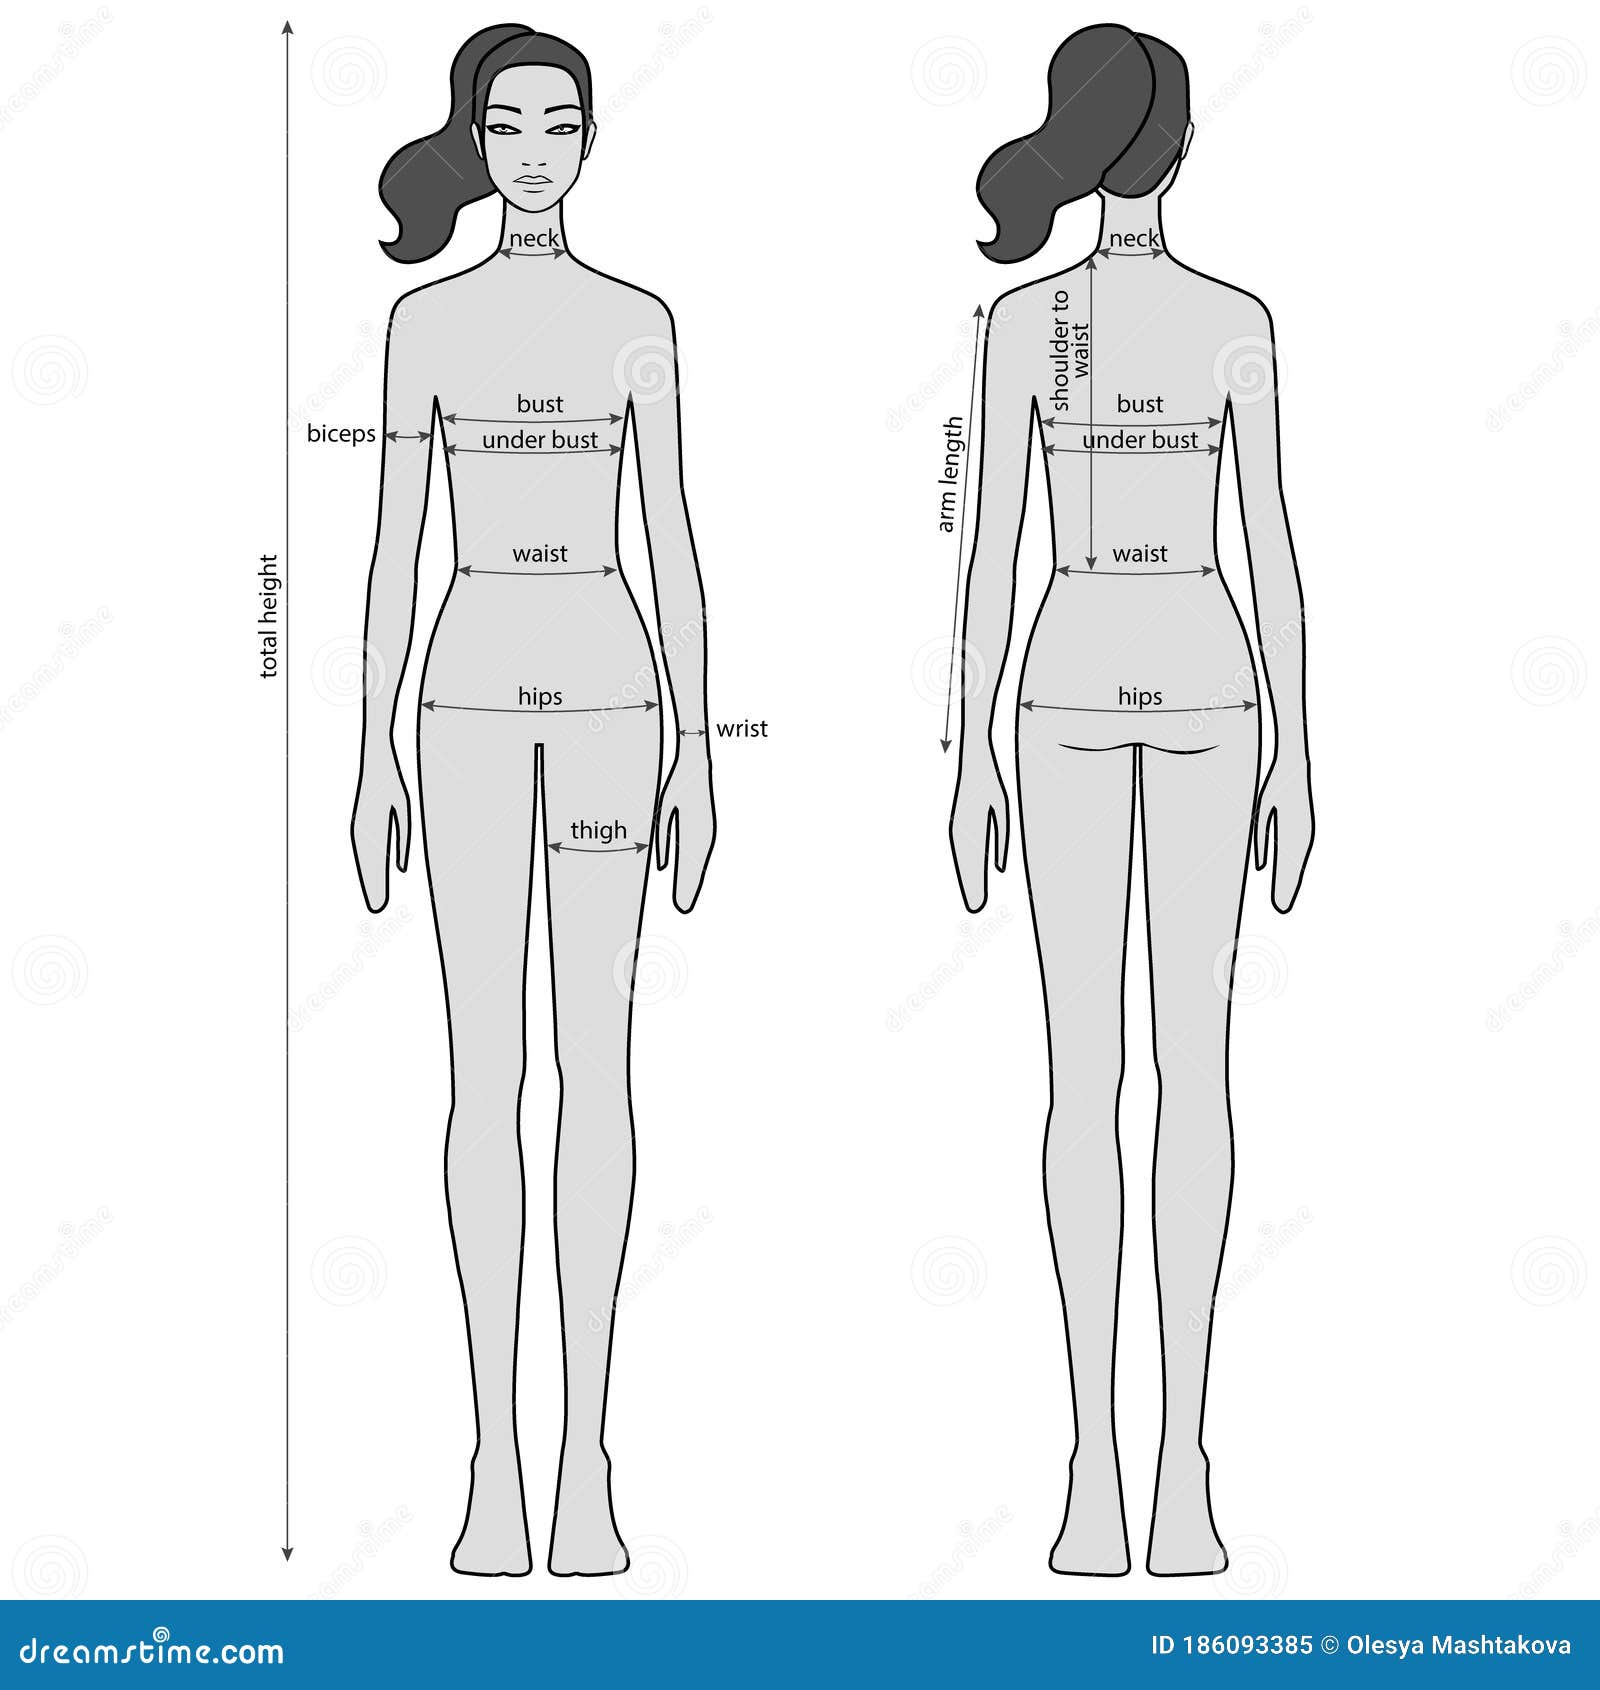 https://thumbs.dreamstime.com/z/woman-body-measurement-chart-scheme-measurement-human-body-sewing-clothes-female-figure-front-back-views-template-186093385.jpg